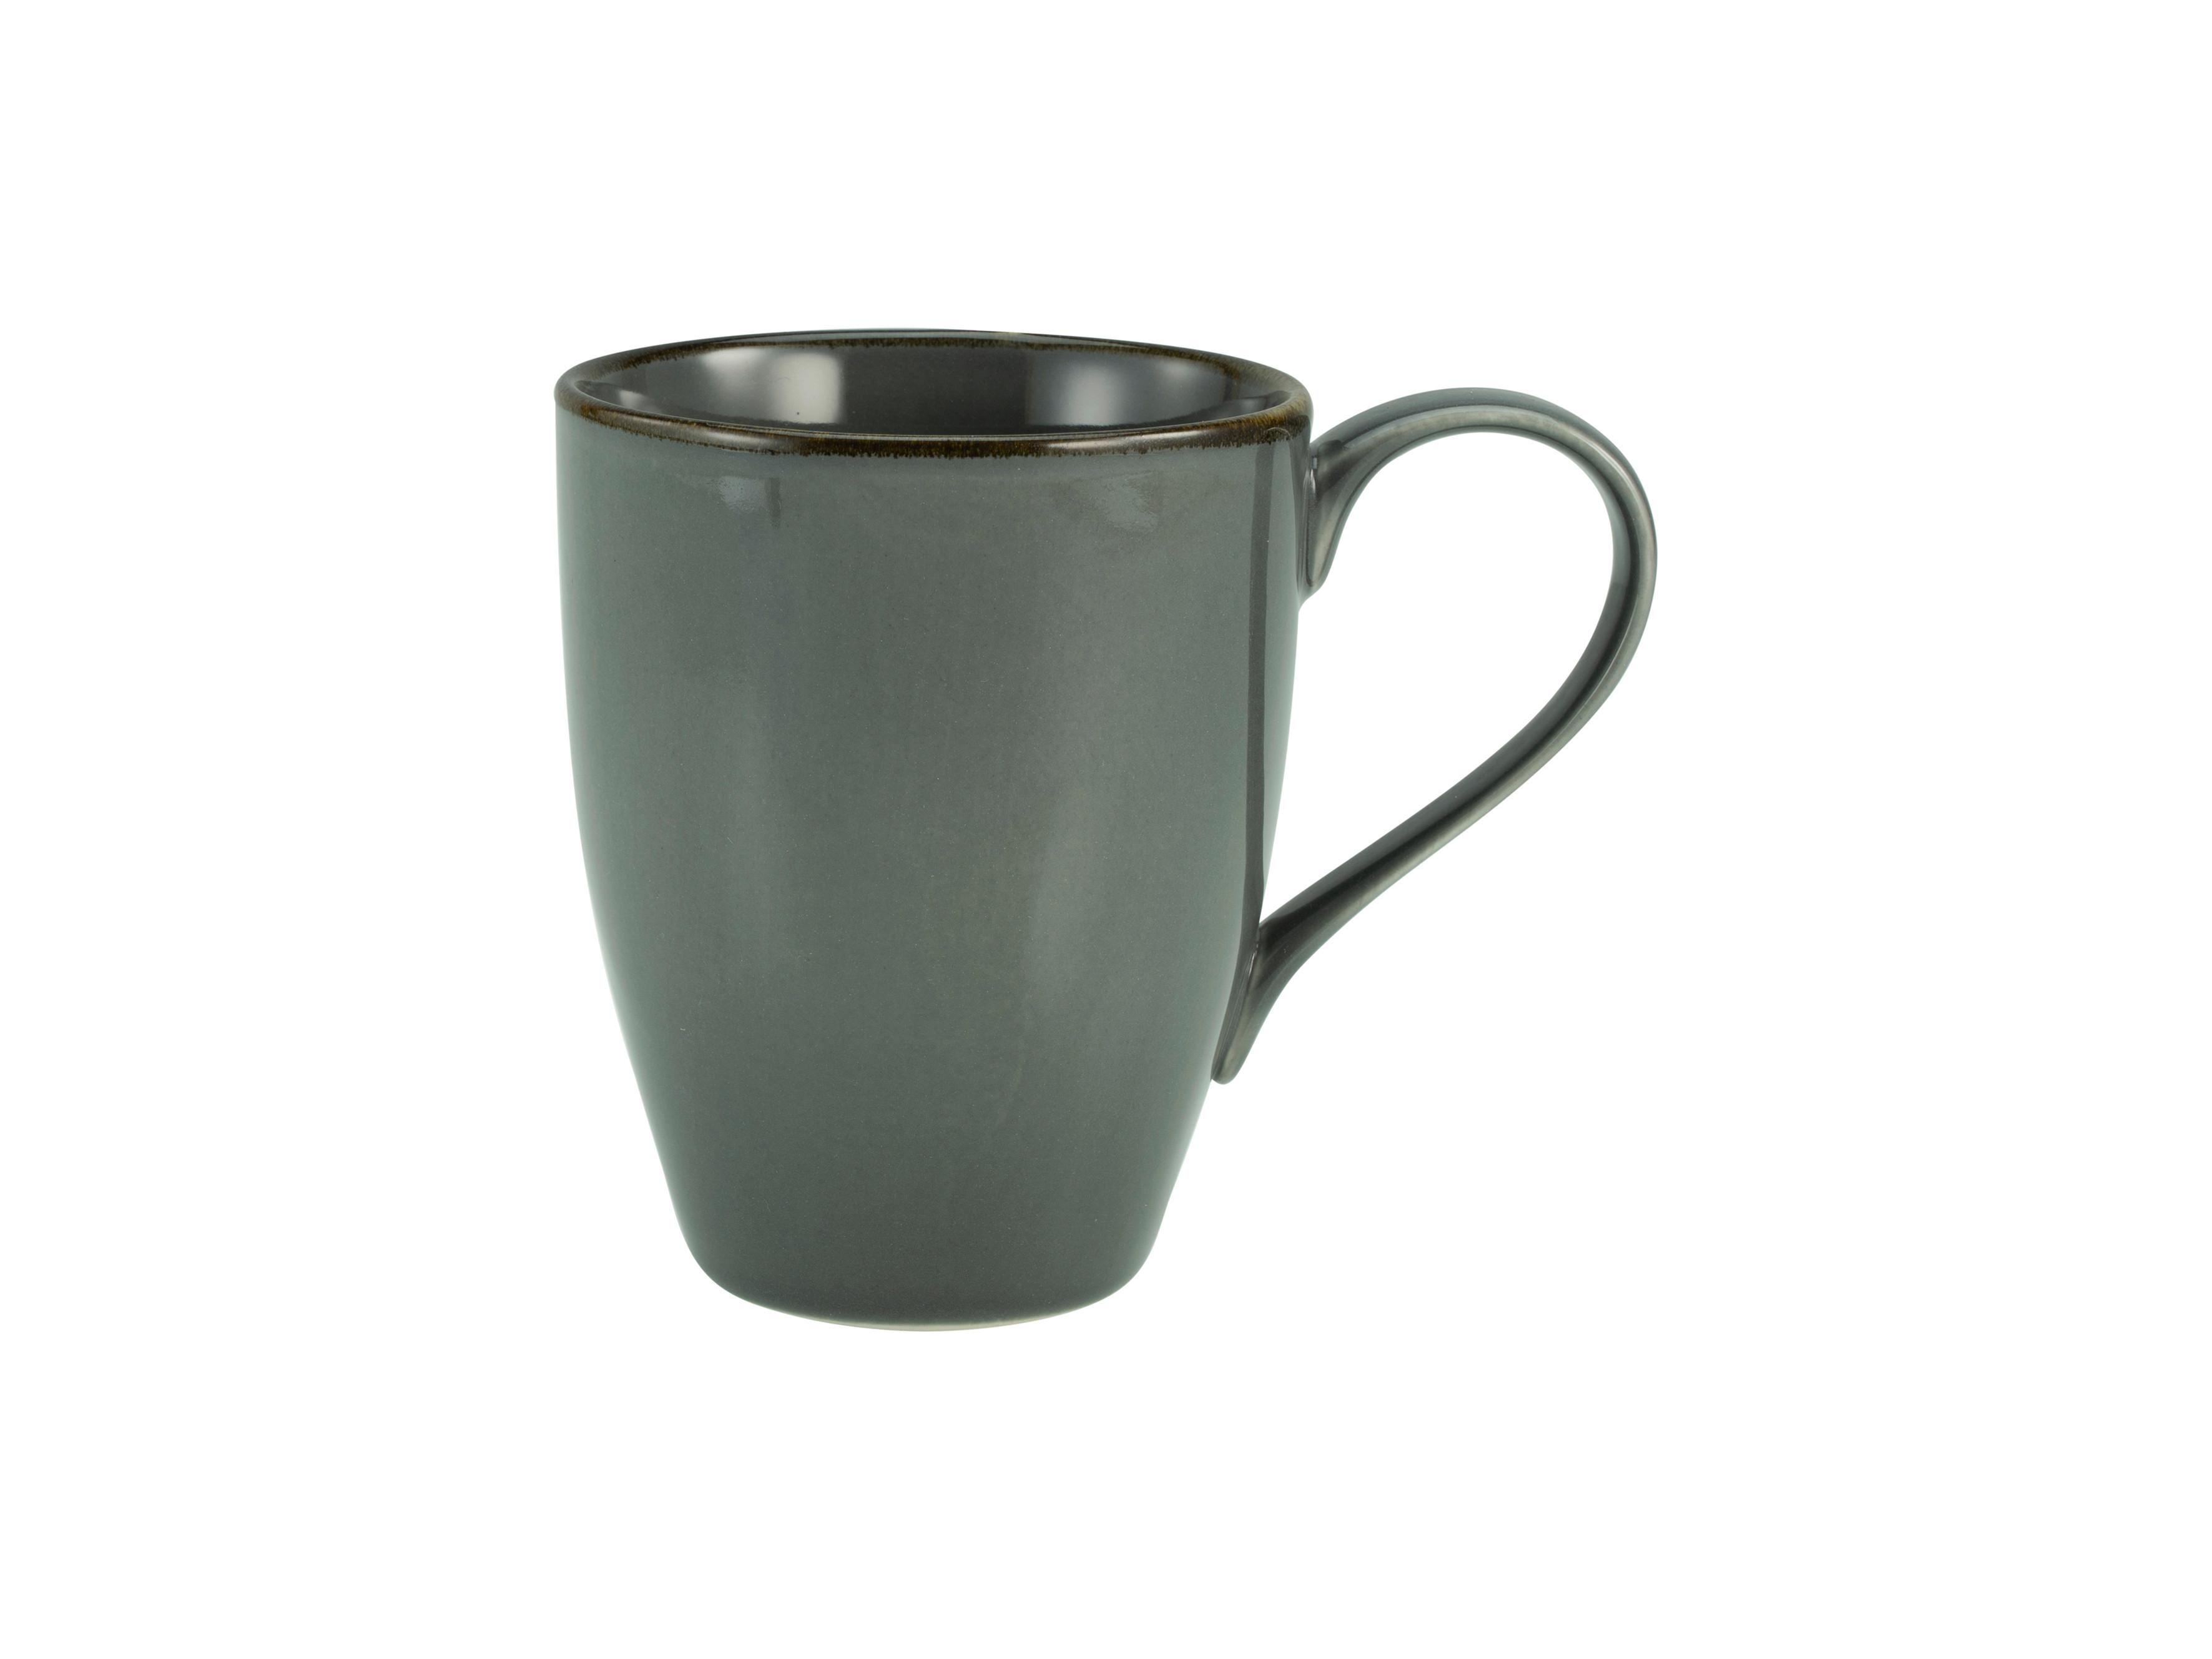 Lonček Za Kavo Linen - antracit, keramika (13/9/11cm) - Premium Living